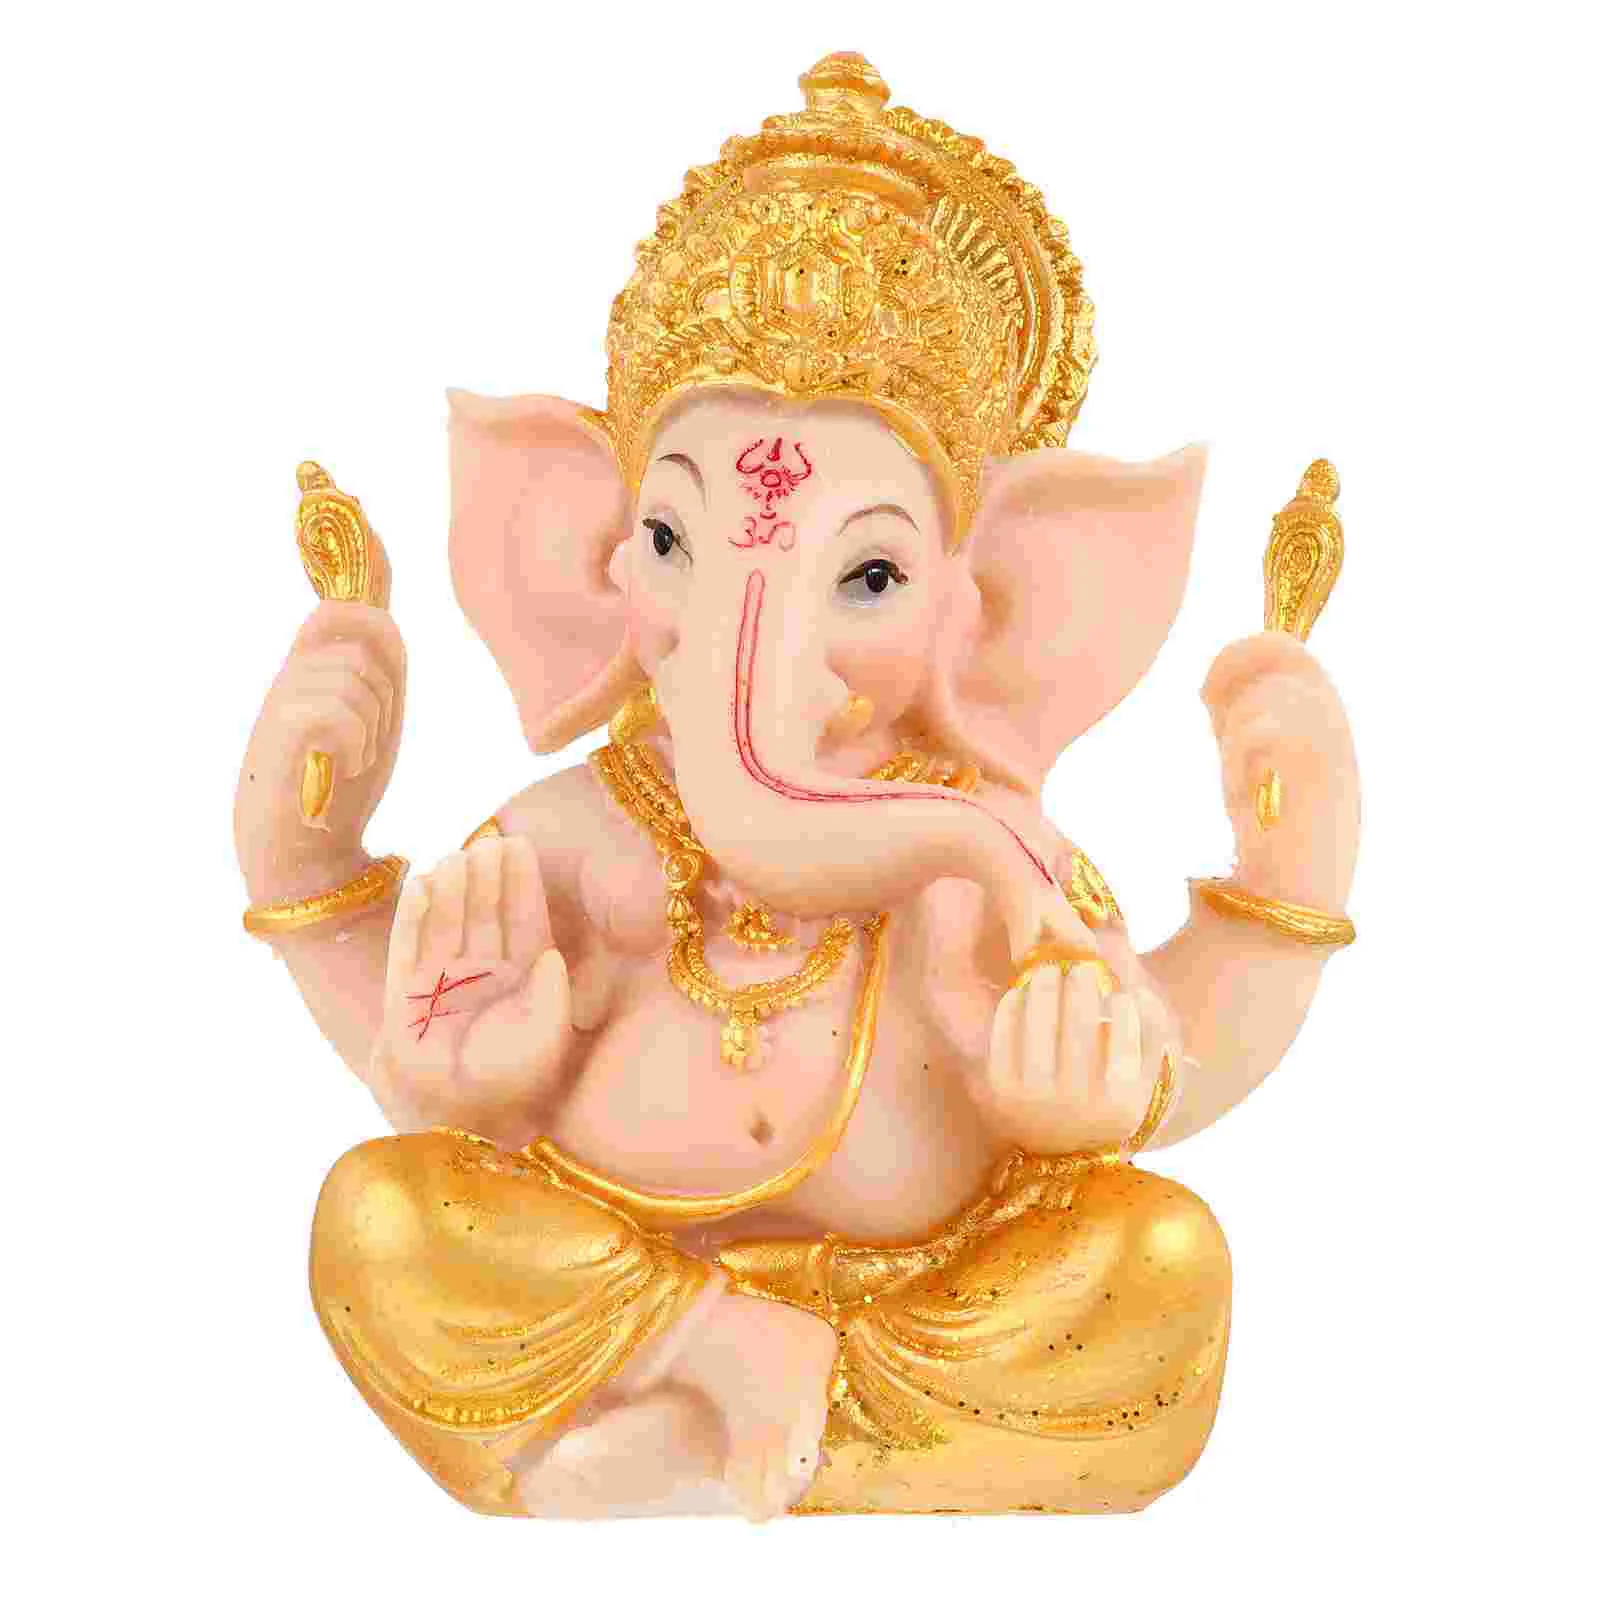 

Hindu Elephant Figurine Gifts Homebodies Ganesha Idol Car Yoga Decor Palm Ornament Statuette Elephant God Decoration